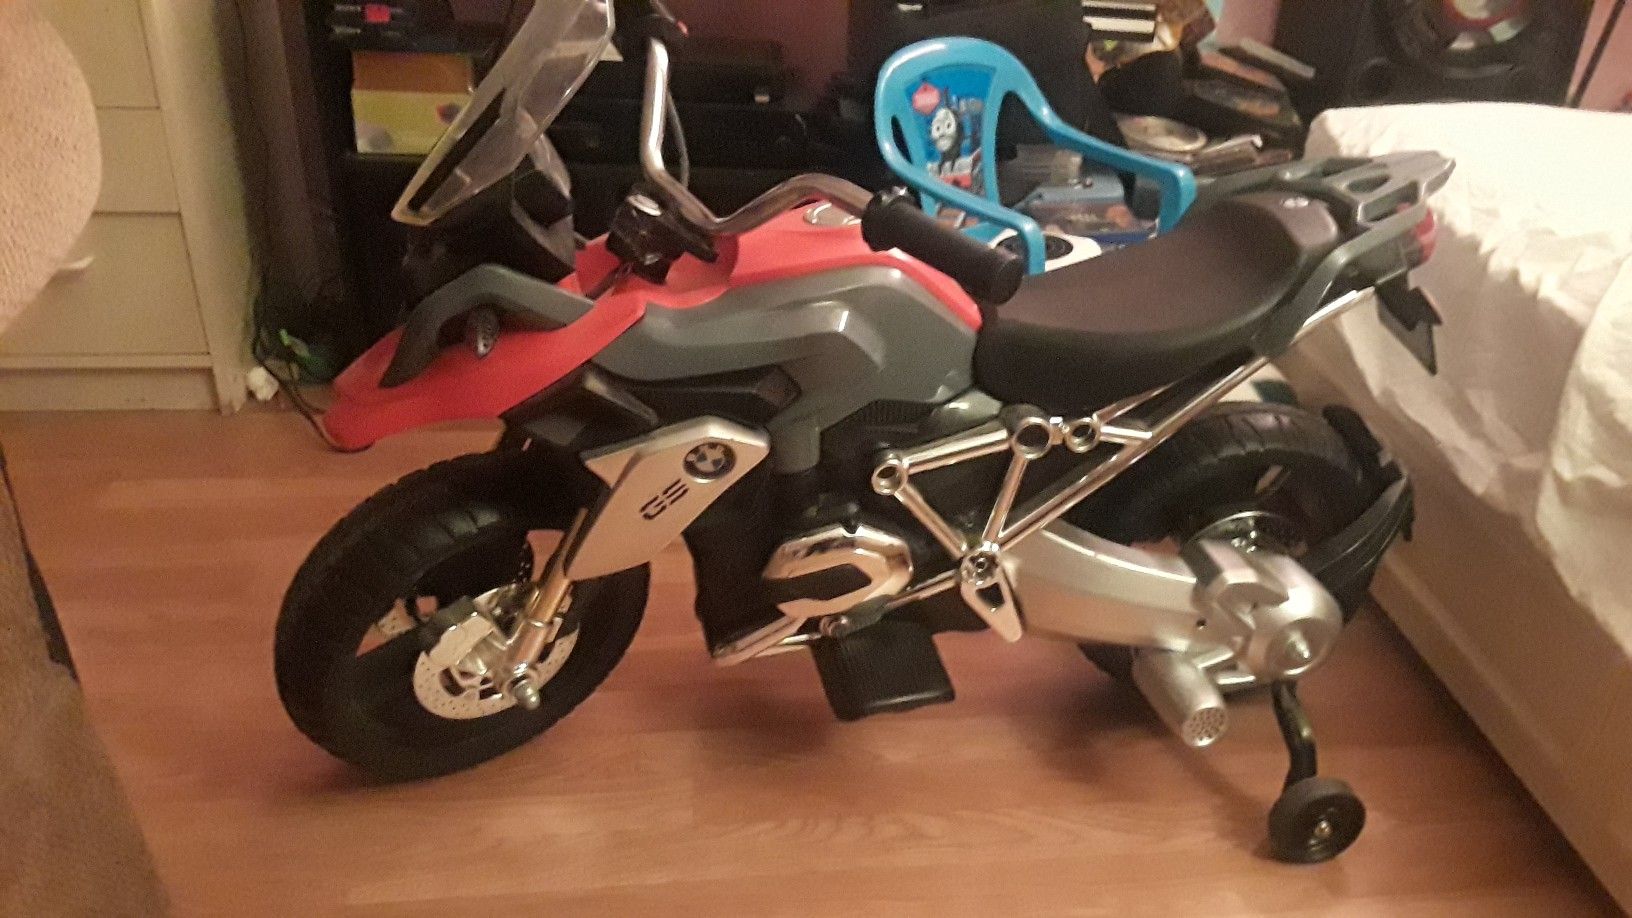 Kid's BMW motorcycle